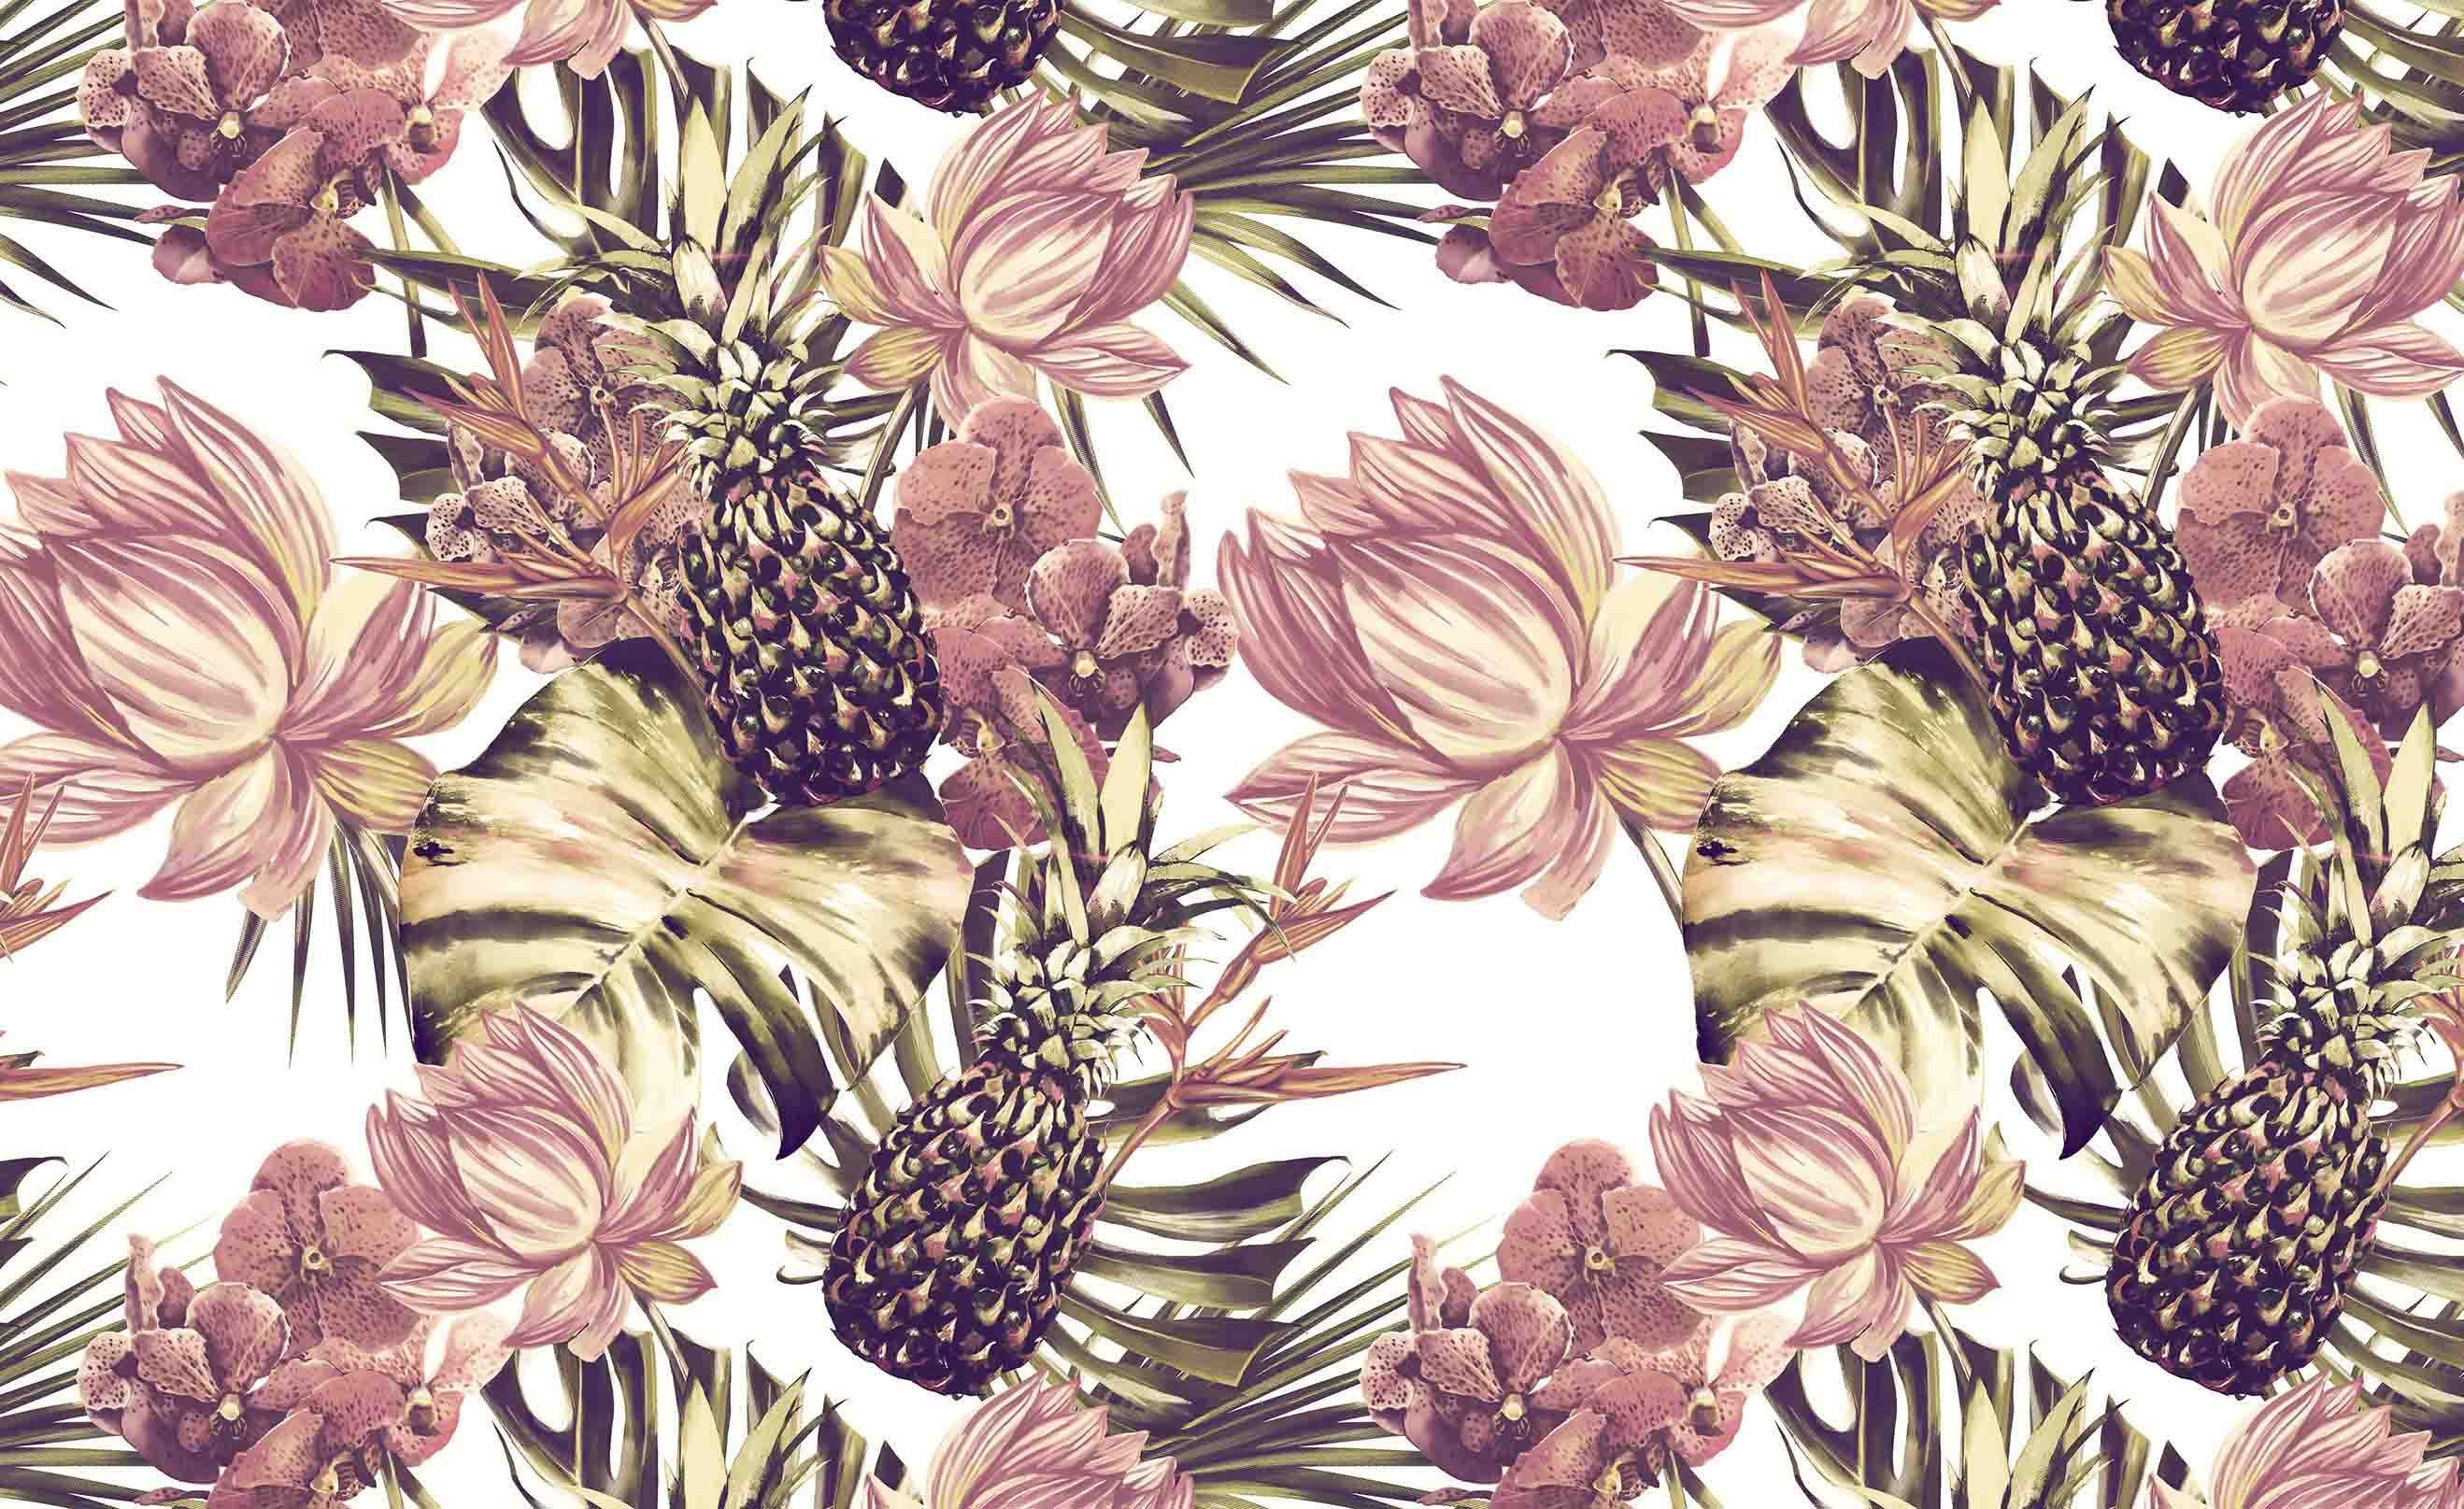 3D Flowers And Pineapple Pattern 641 Wallpaper AJ Wallpaper 